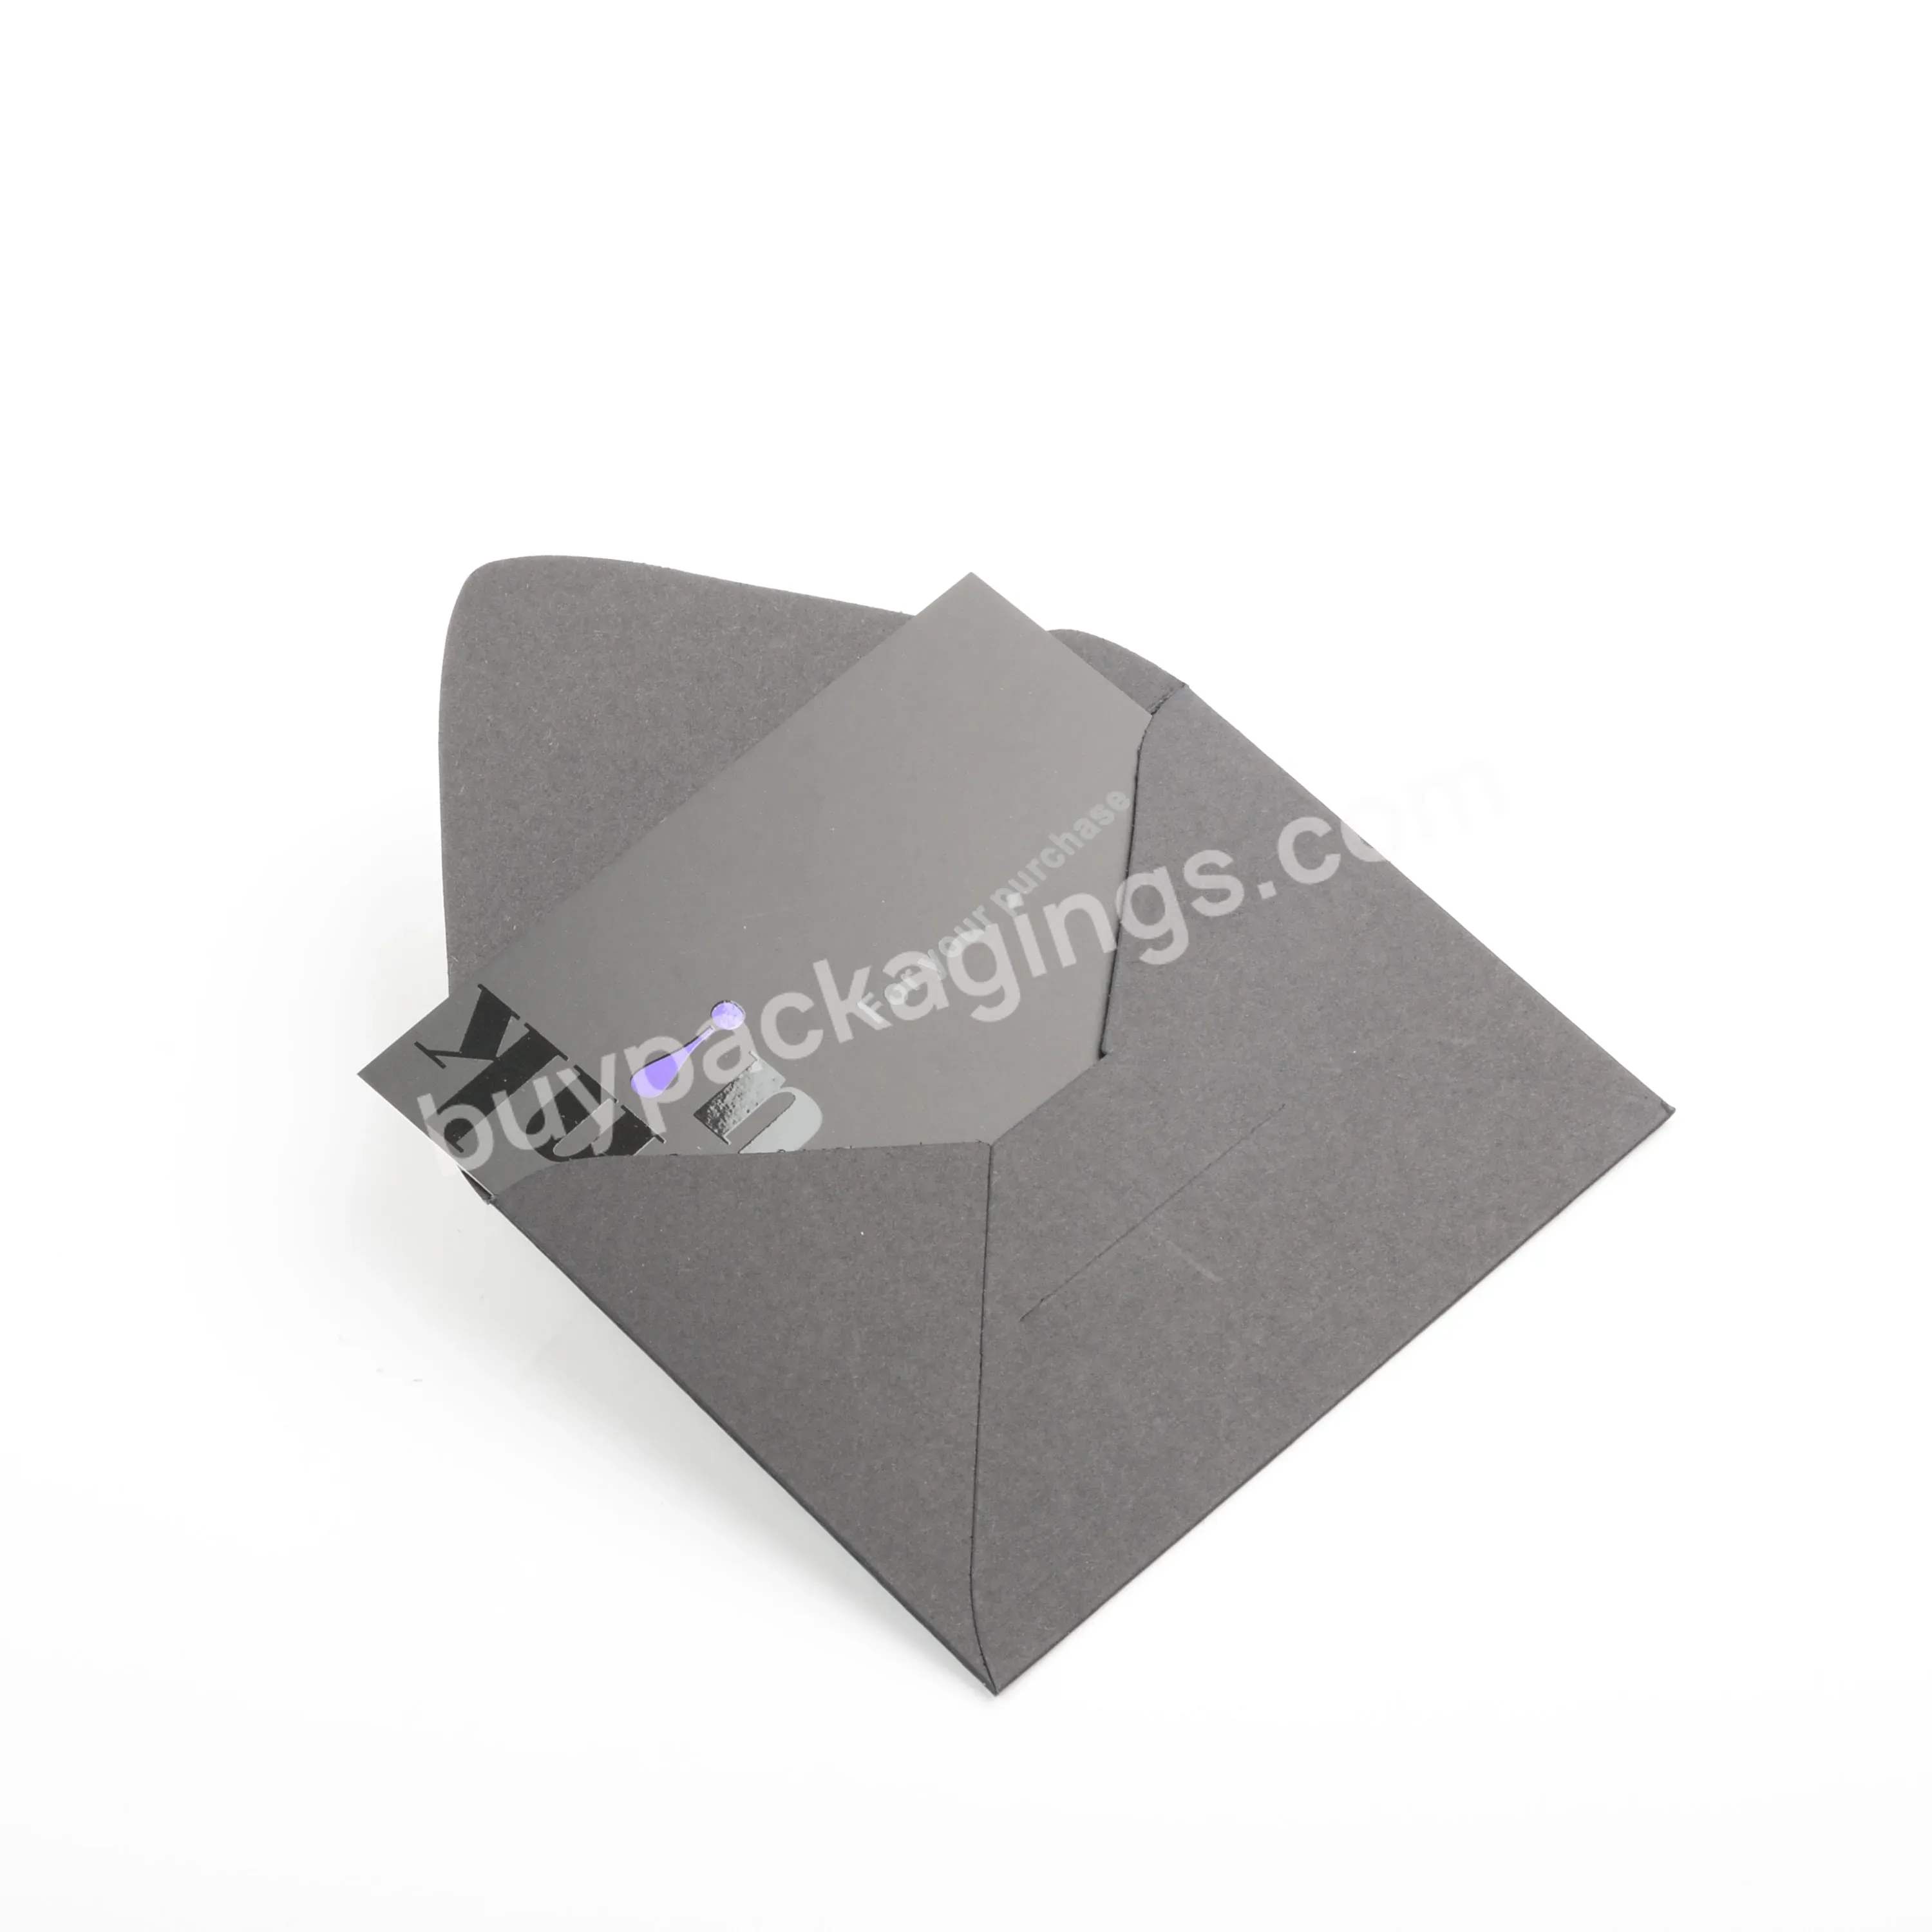 Wholesale Custom Paper Envelopes Printed Black Paper Envelopes From China - Buy Custom Paper Envelopes,Black Paper Envelopes From China,Black Envelope.